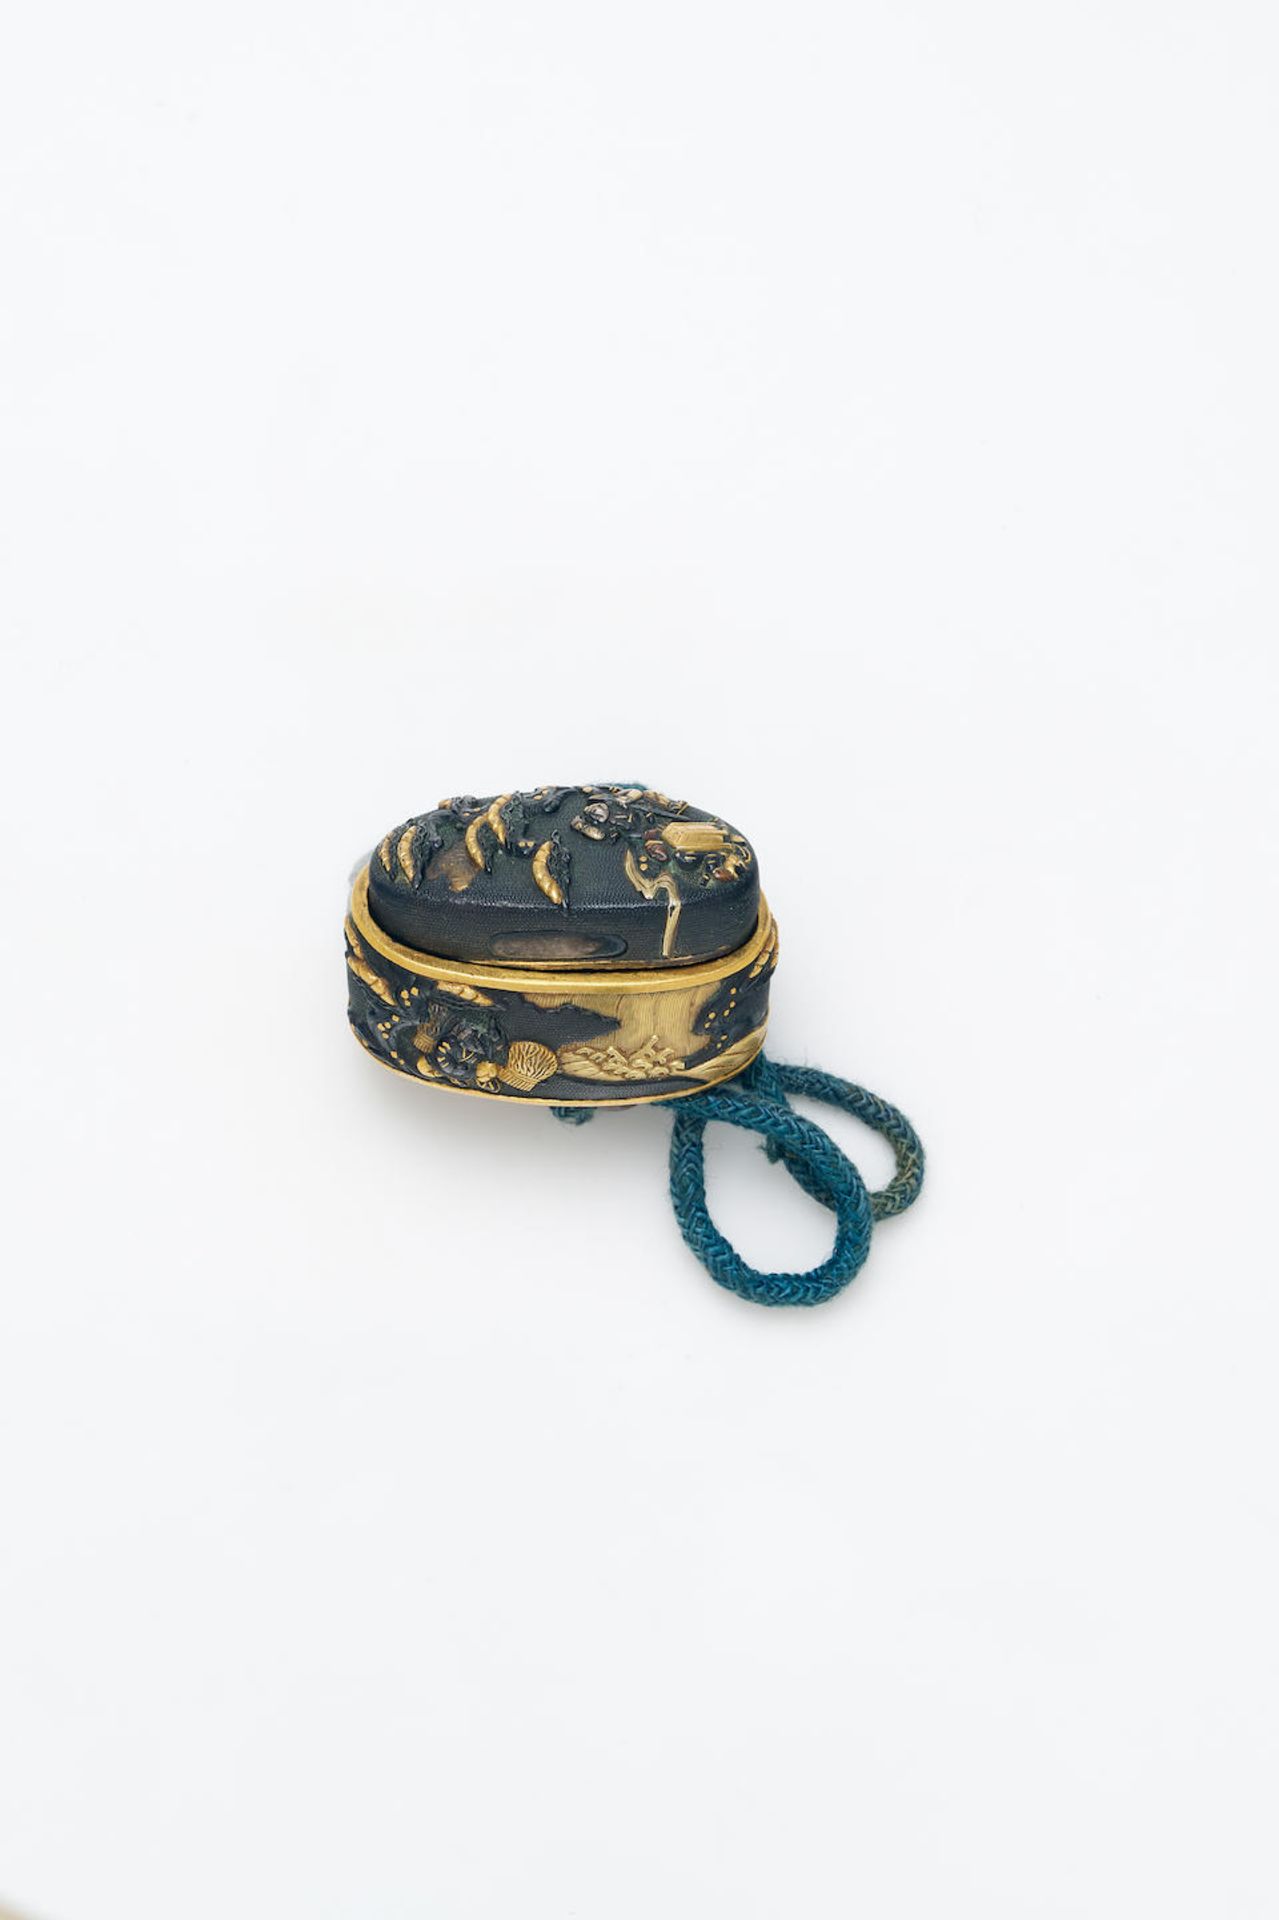 A GOLD AND MIXED-METAL INLAID FUCHIGASHIRA REPURPOSED AS A NETSUKE Edo Period, 18th/19th Century